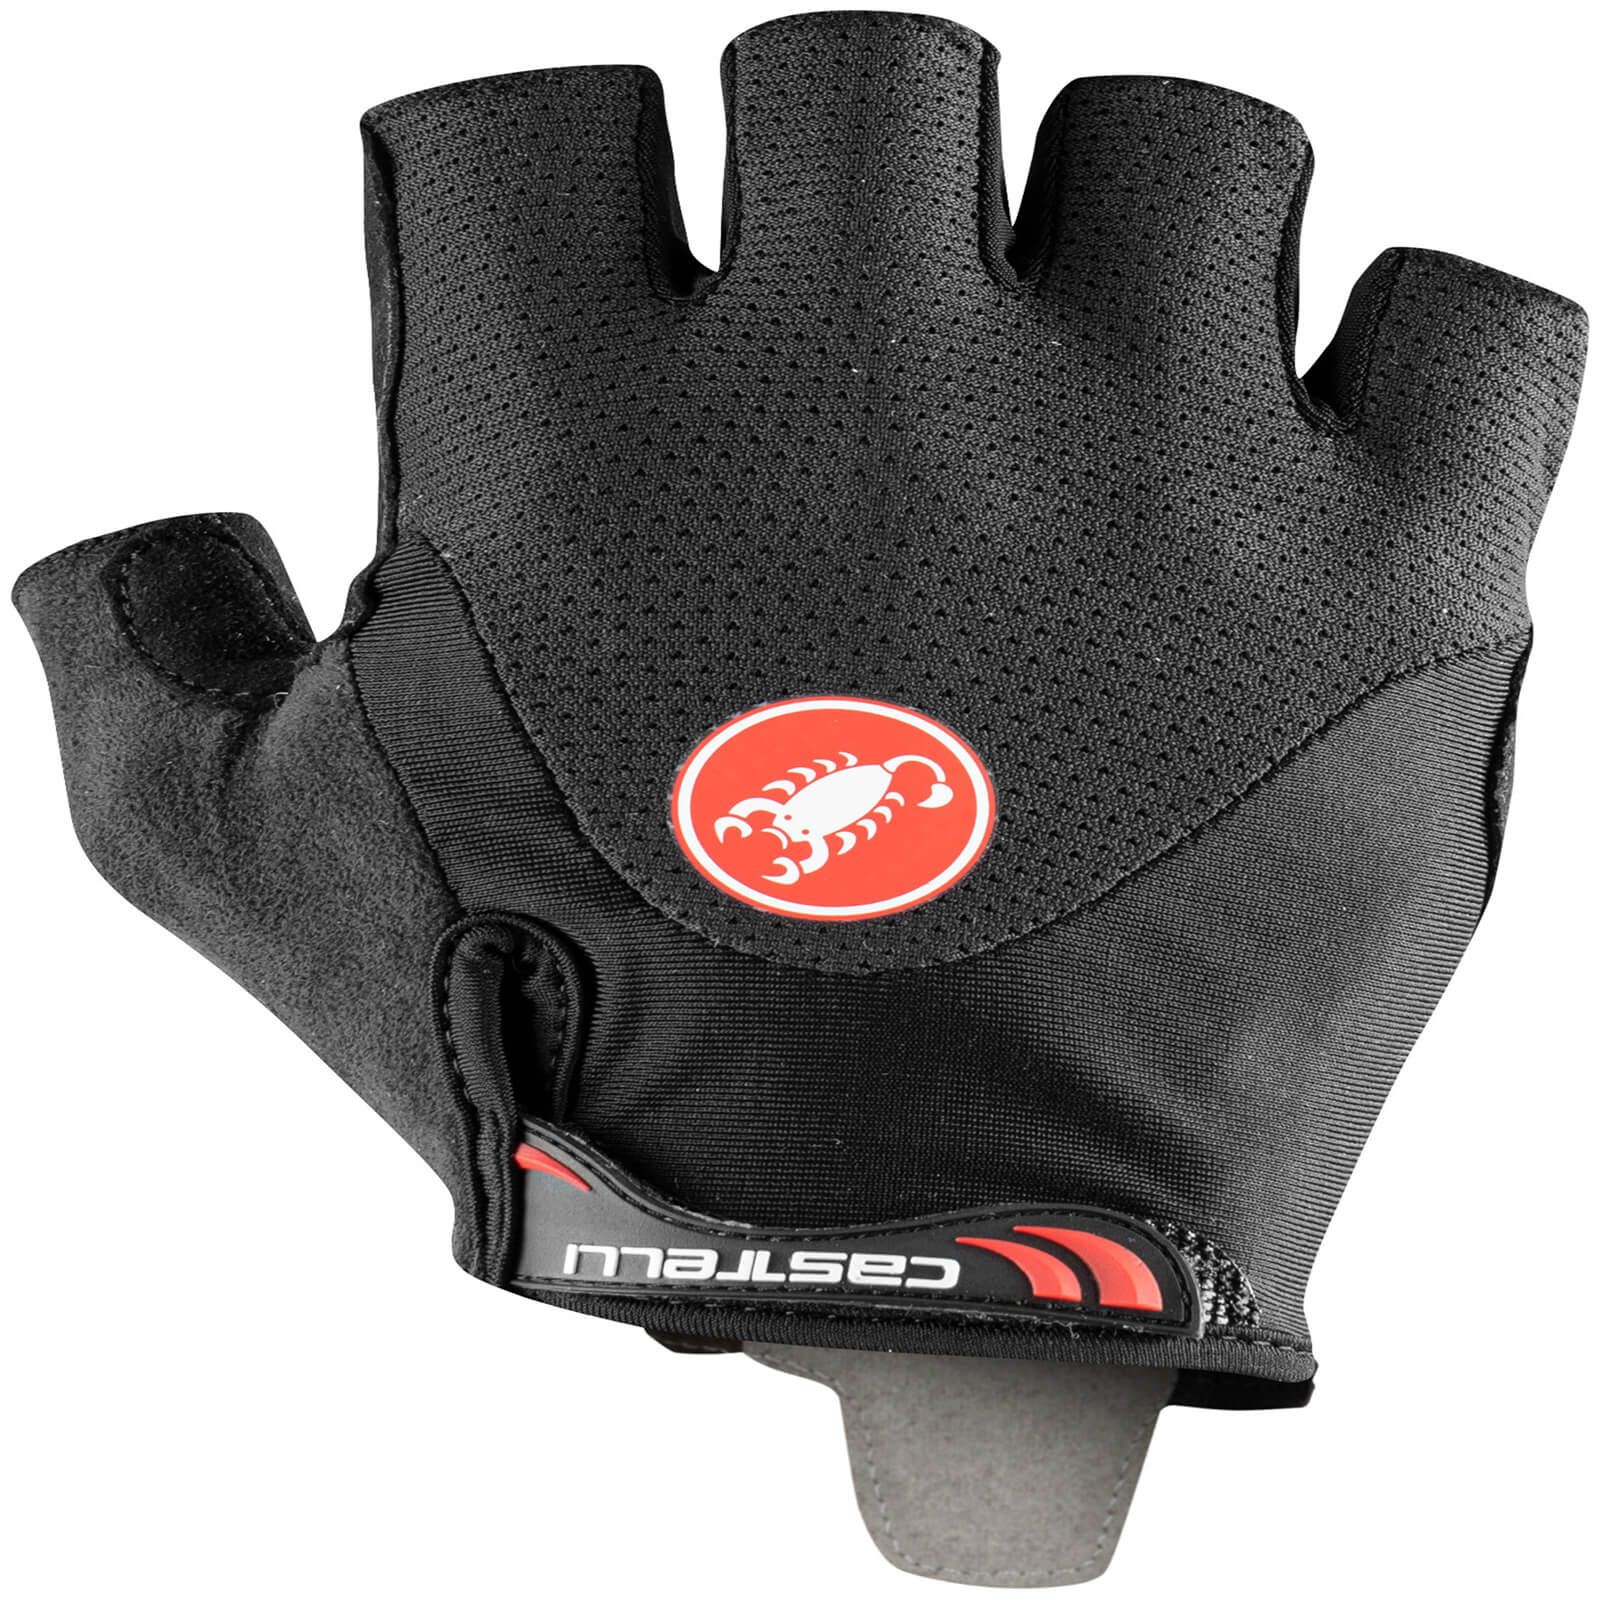 Castelli Arenberg Gel 2 Gloves - S - Black